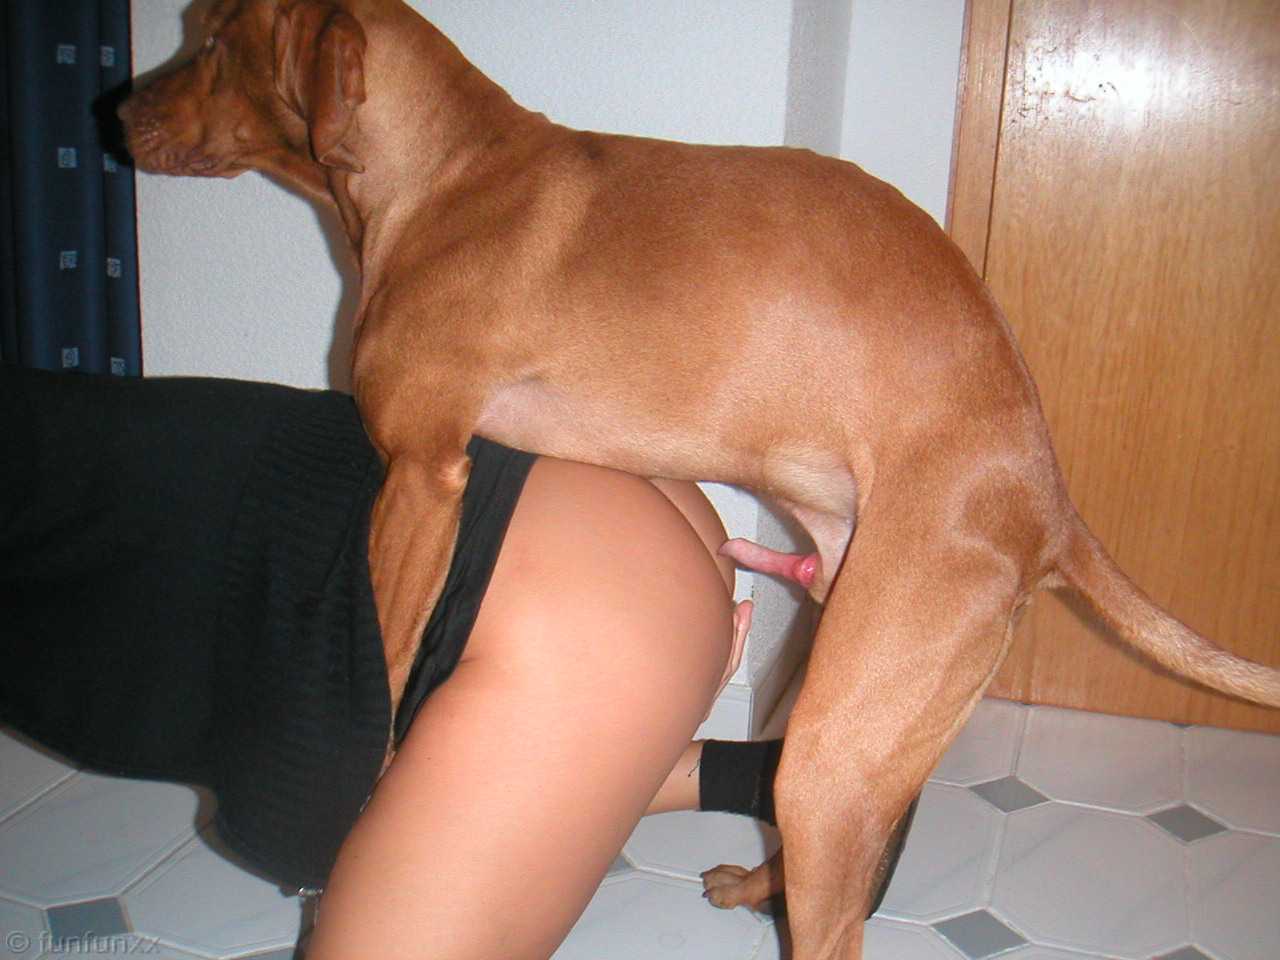 Dog sex pics